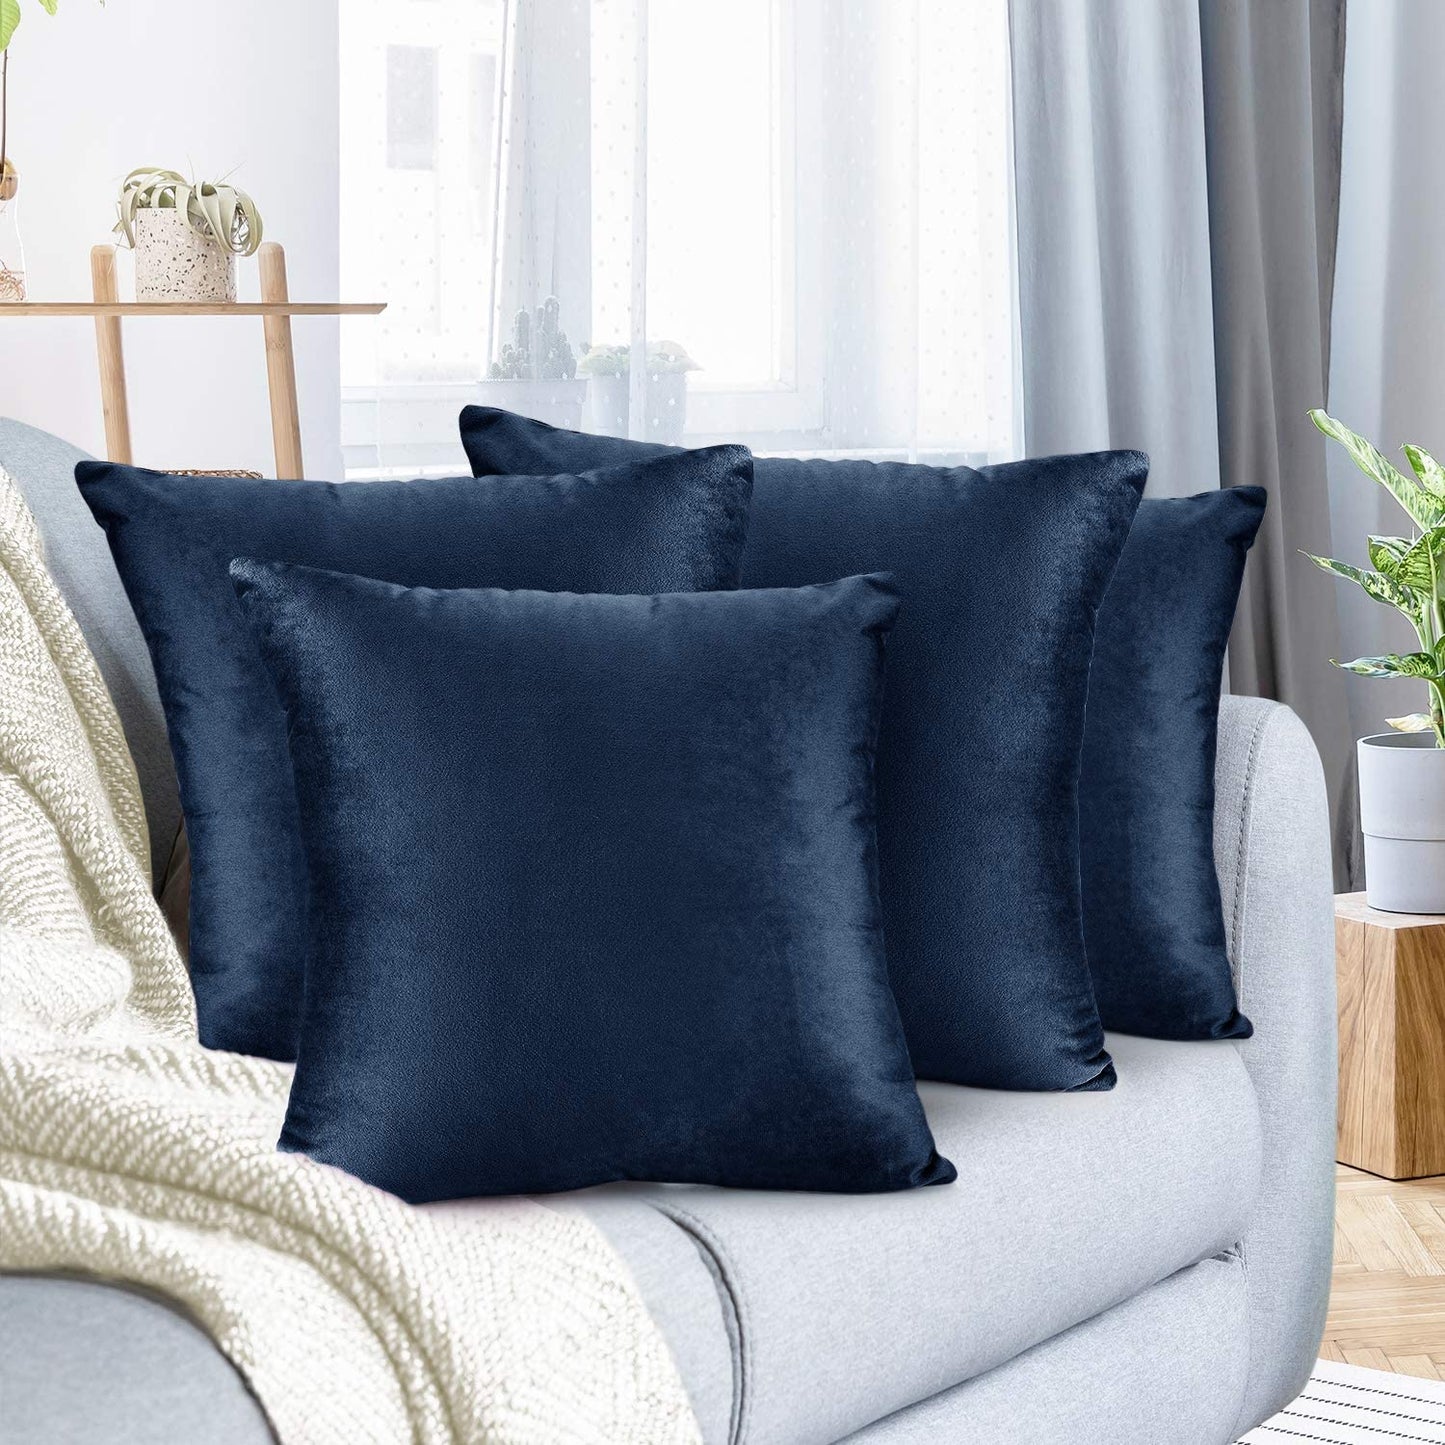 Plain Velvet Cushion 16 x 16 inches - Navy Blue